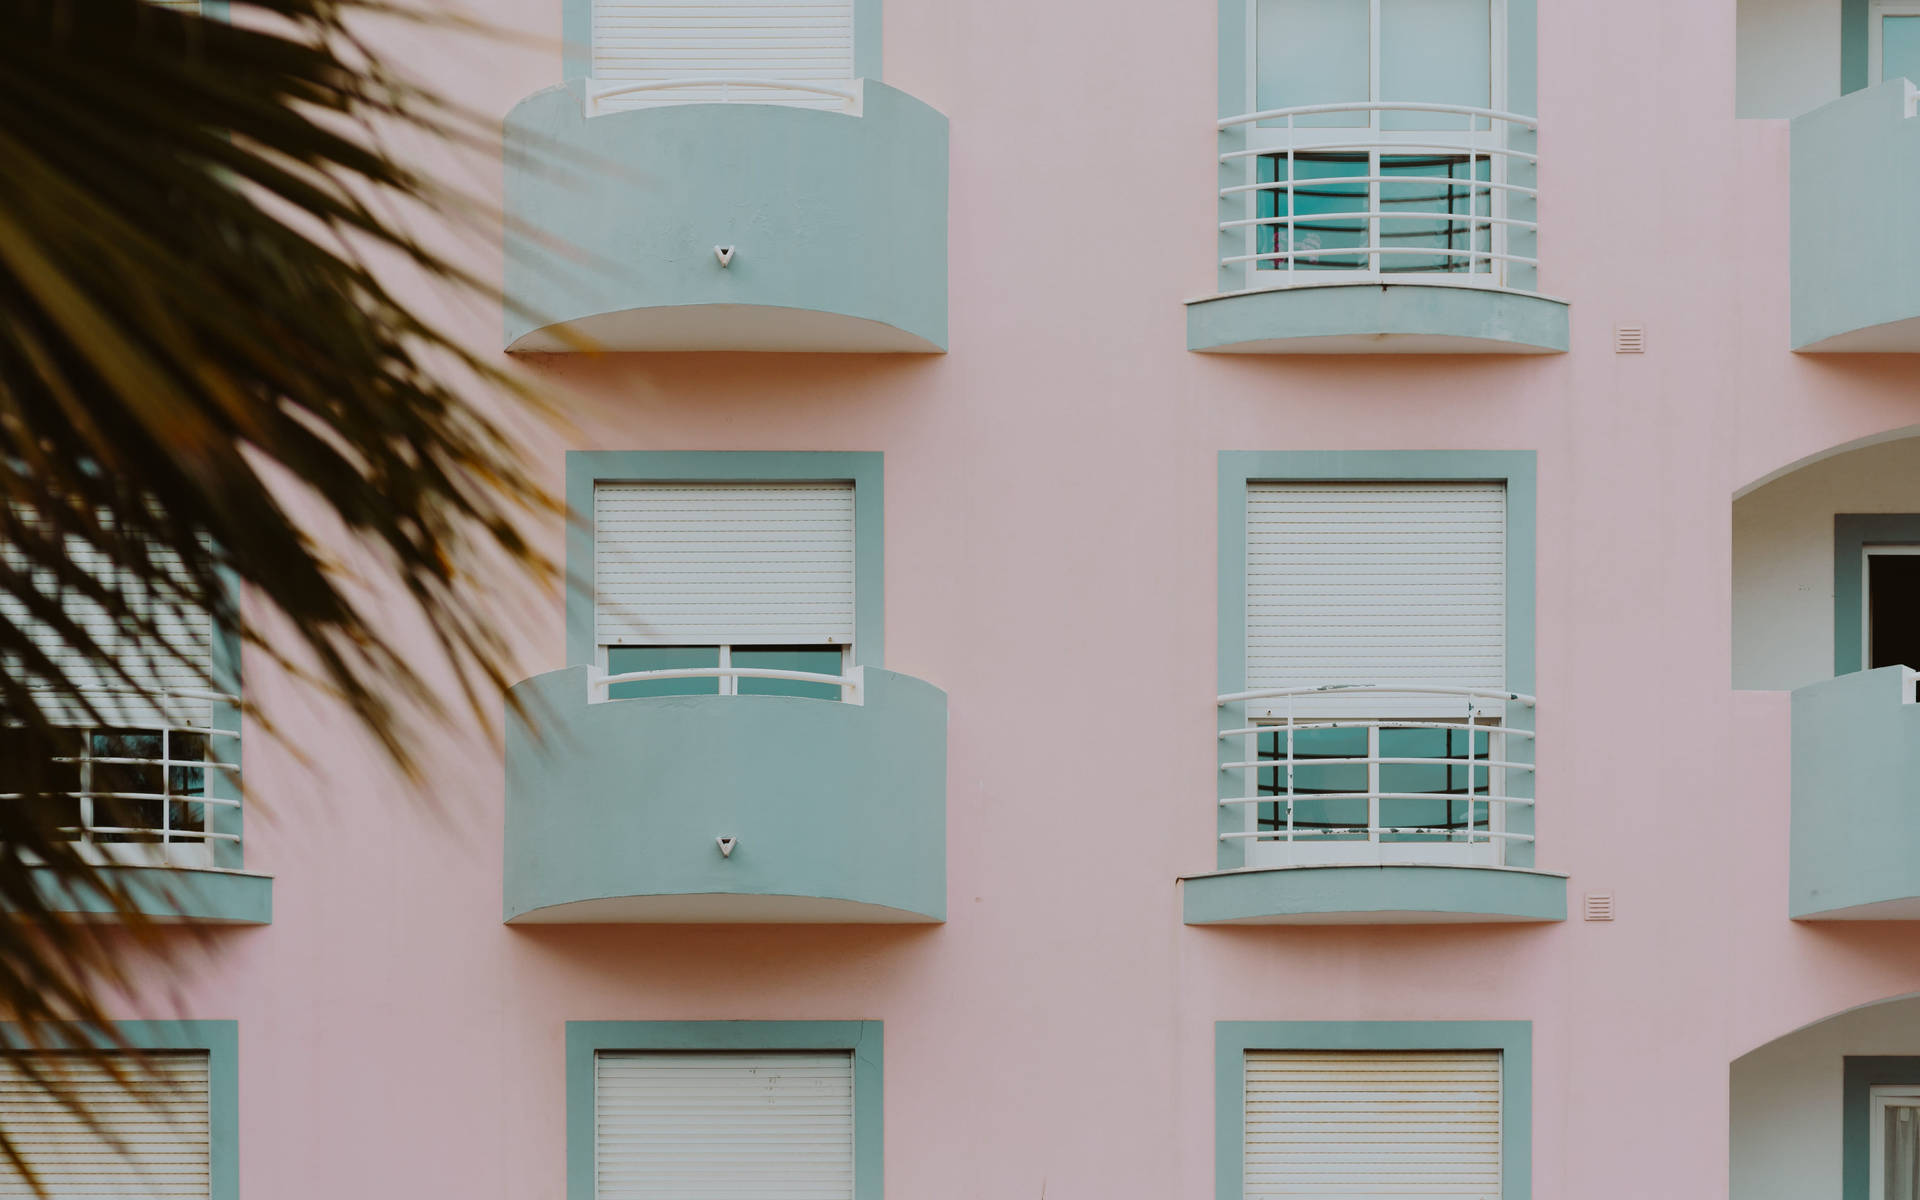 Minimalist Balconies In Pastel Colors